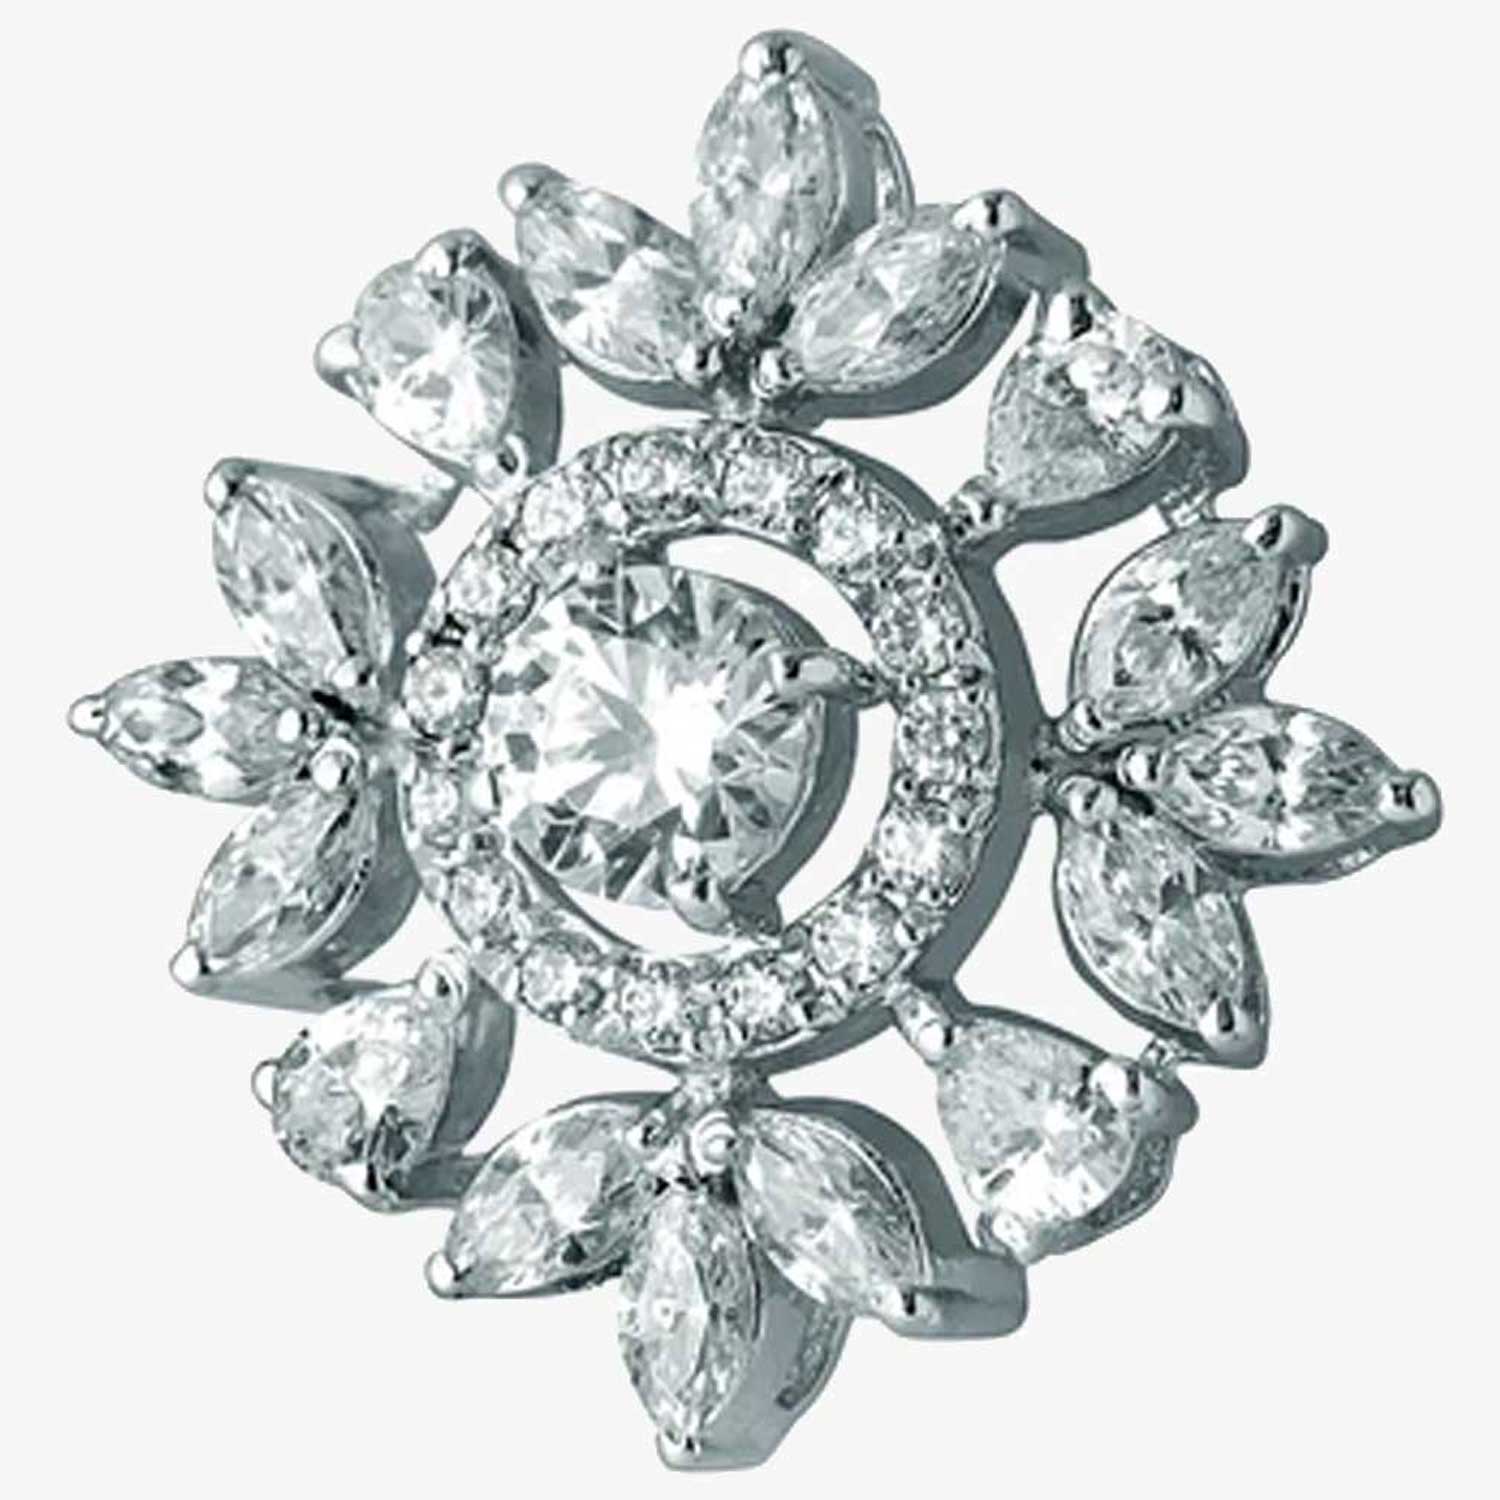 Silver pendant for women